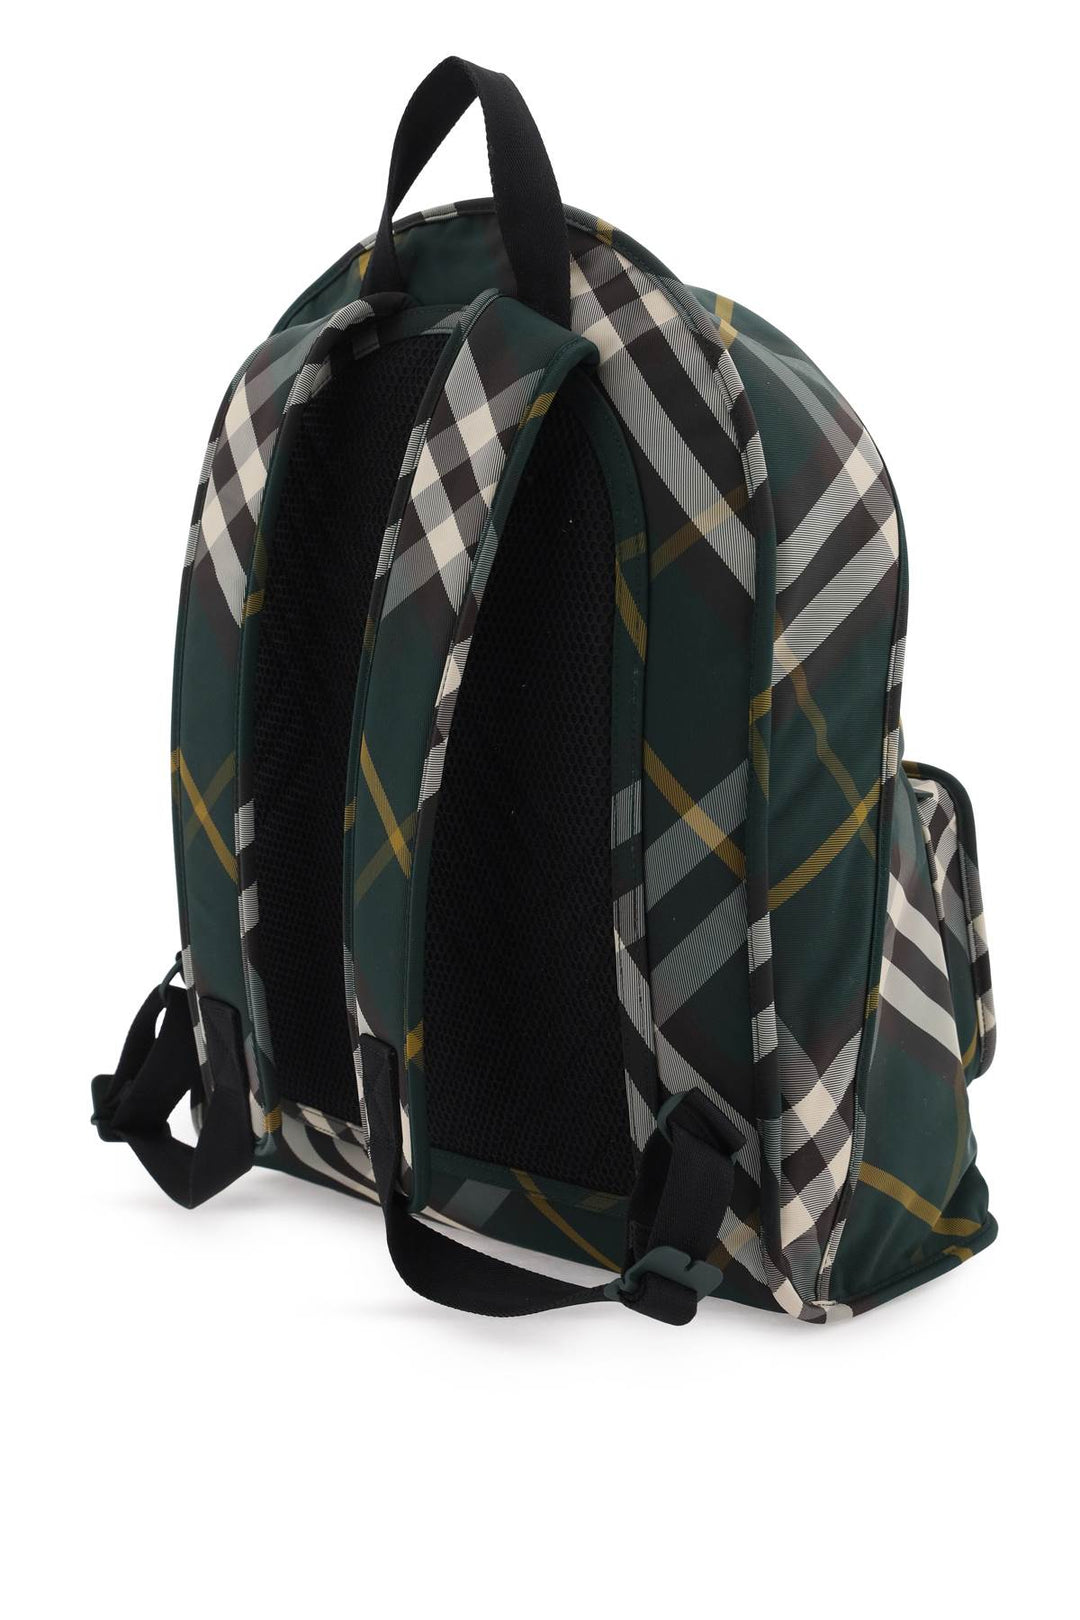 Burberry Shield Backpack   Verde